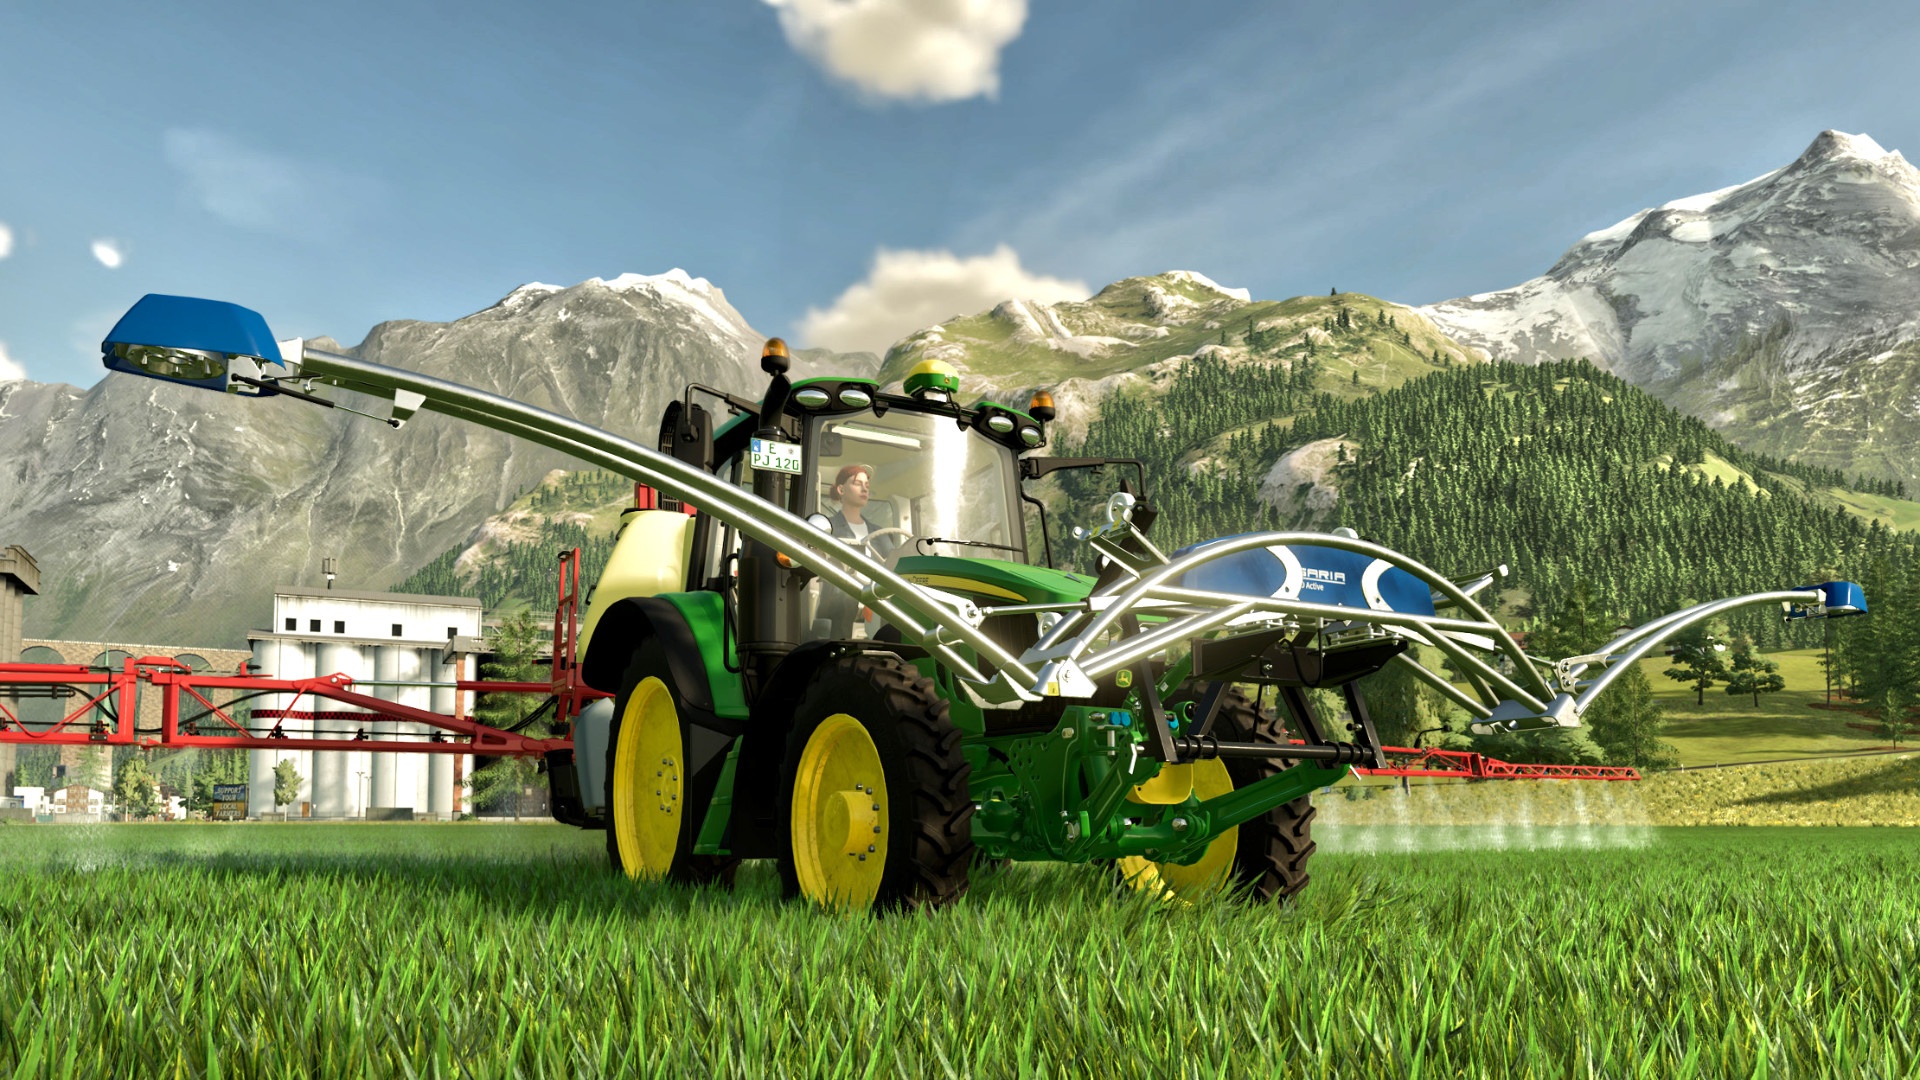 https://images.cgames.de/images/gamestar/4/landwirtschafts-simulator-22-precision-farming_6172036.jpg